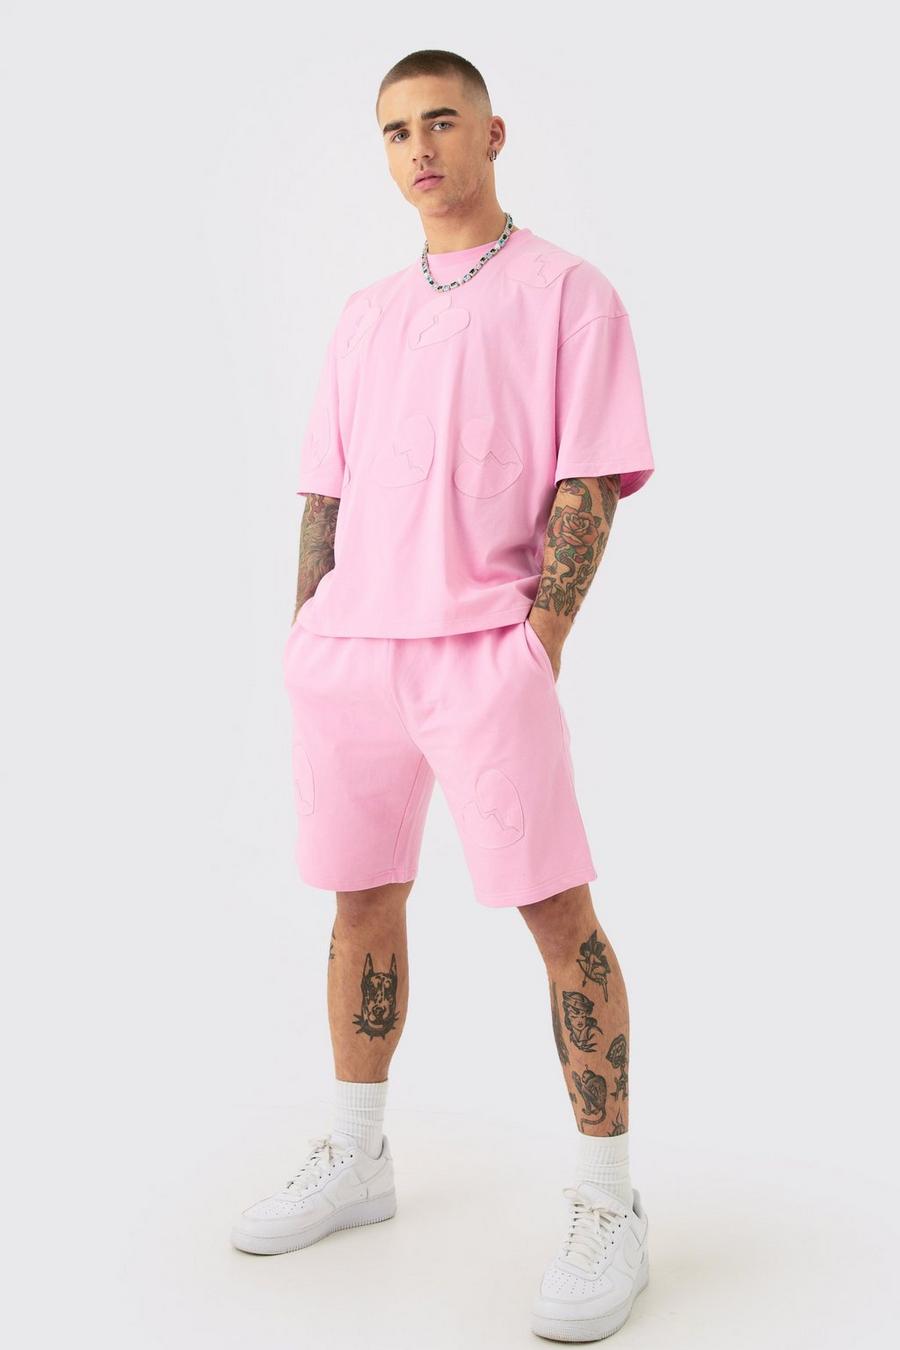 Kastiges Oversize T-Shirt mit Herz-Applikation & Shorts, Pink